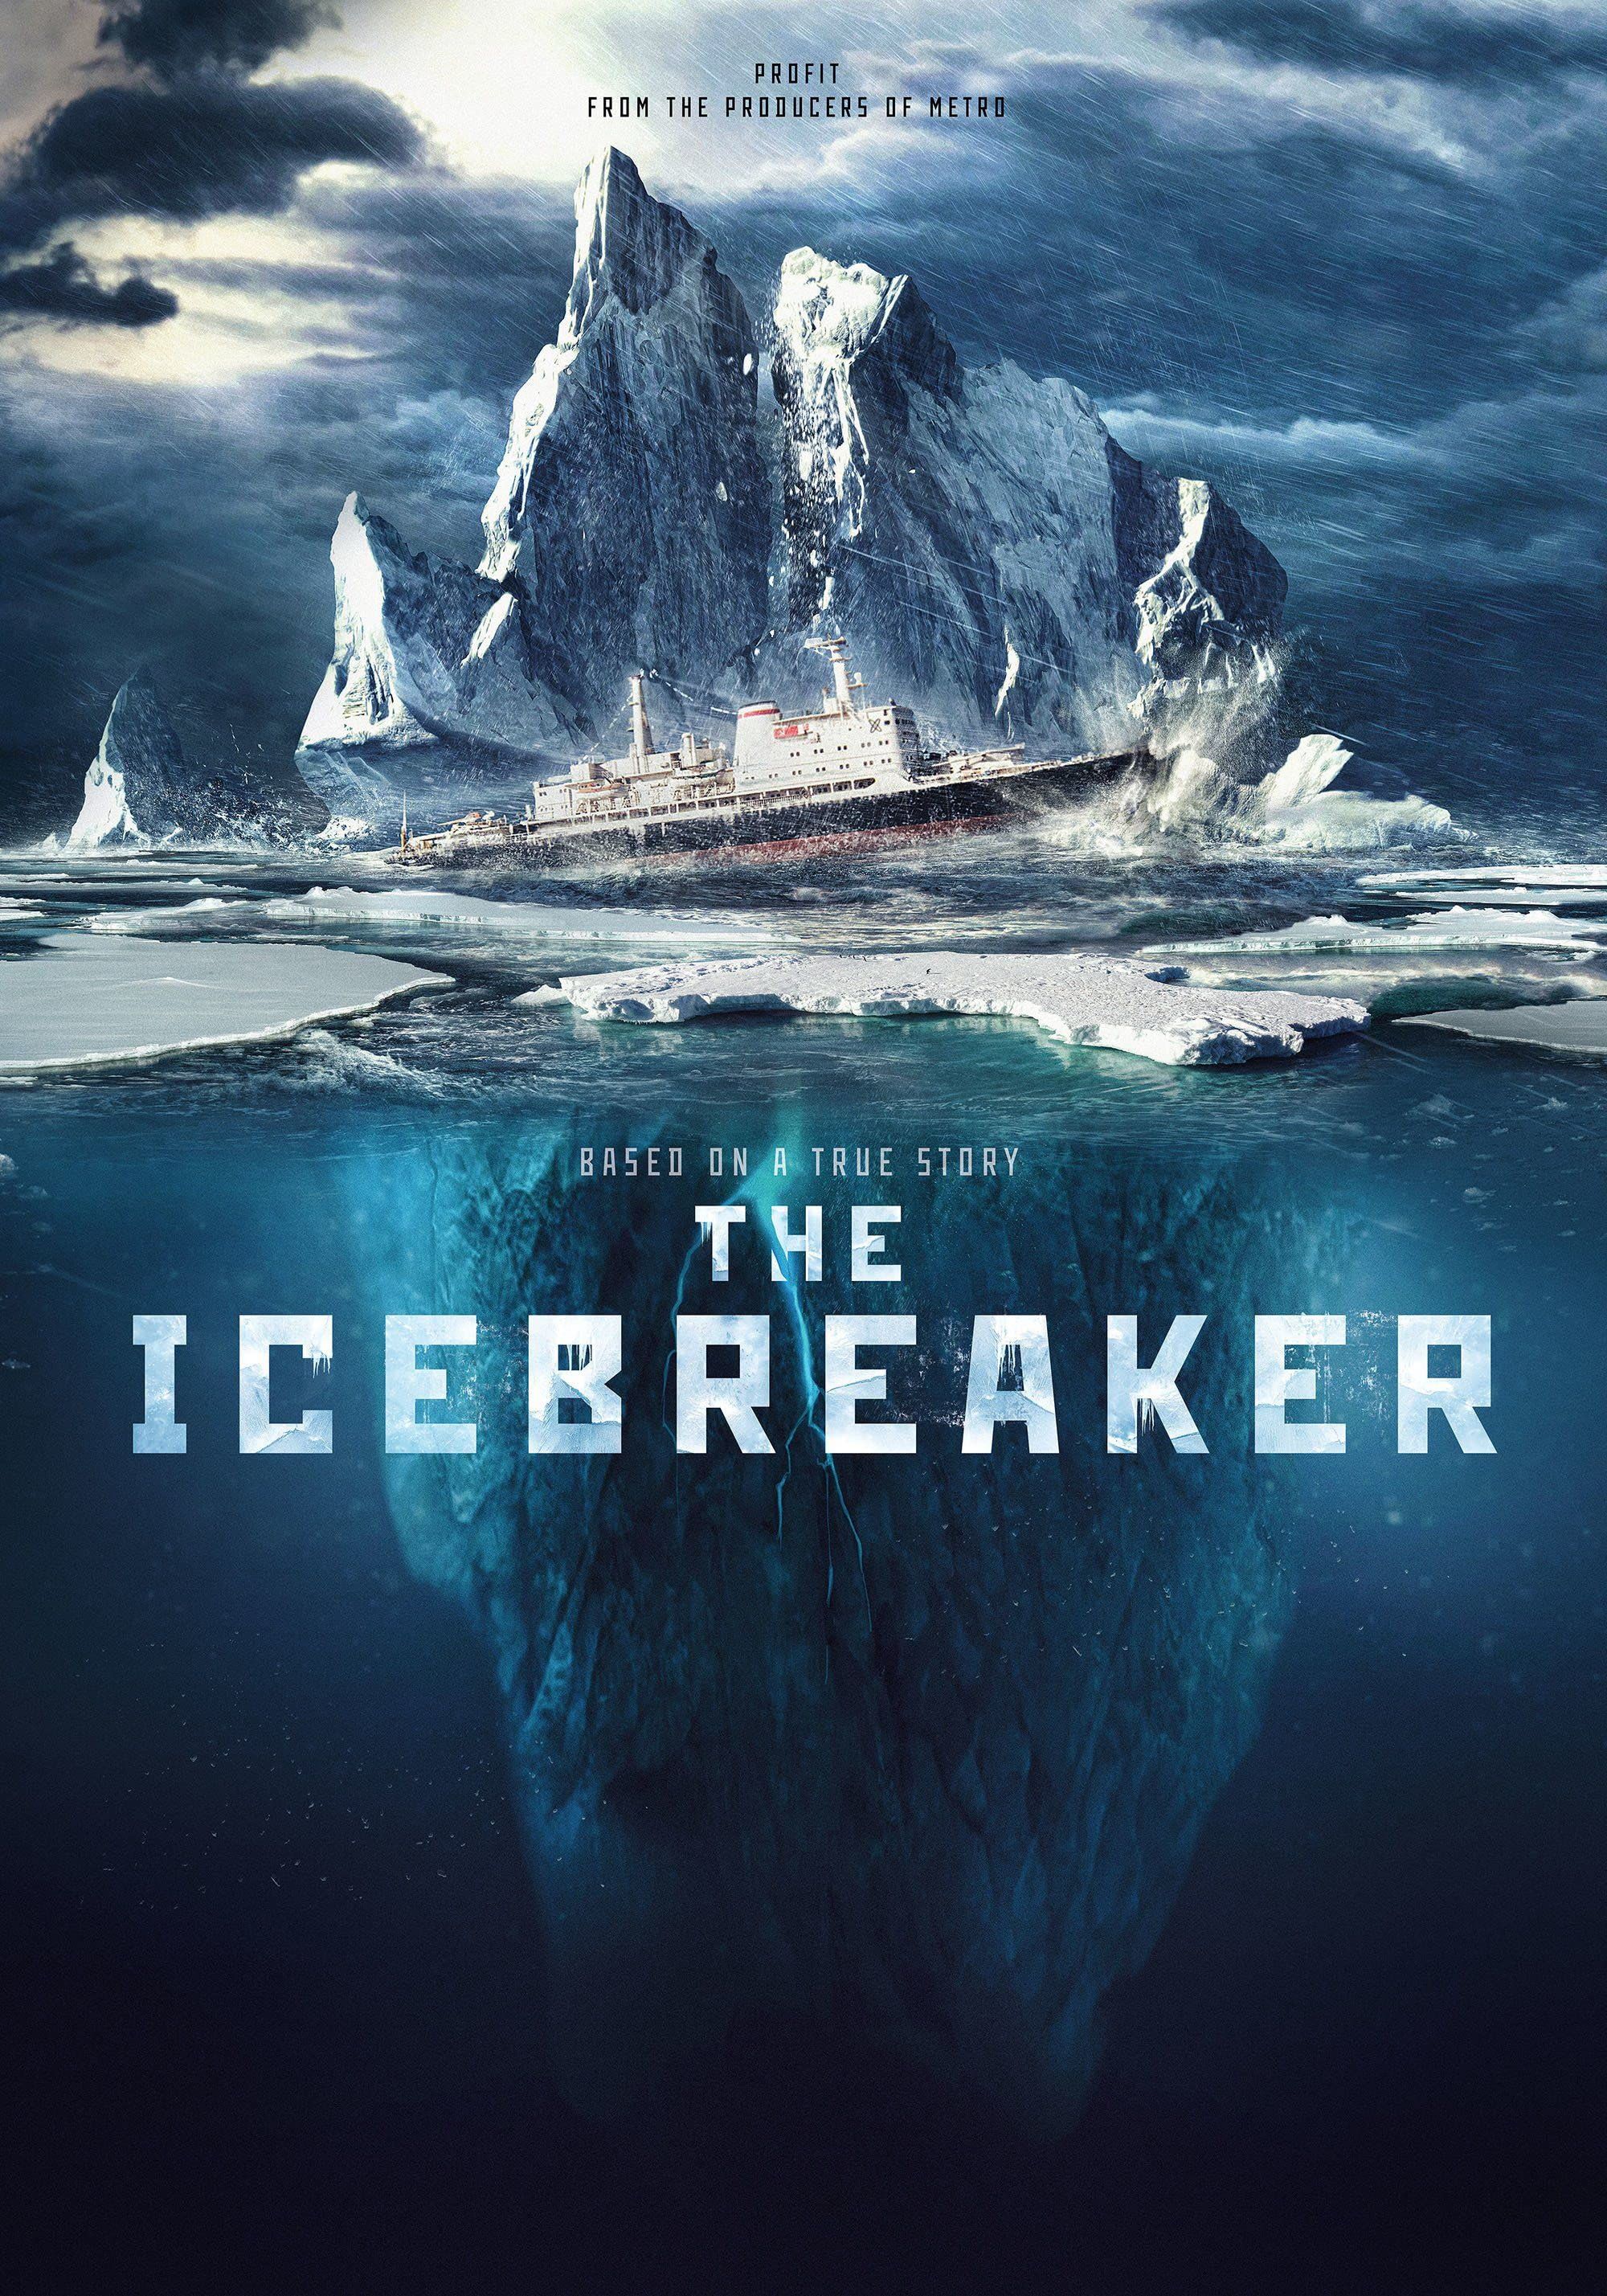 The Icebreaker (2016) Hindi Dubbed HDRip download full movie